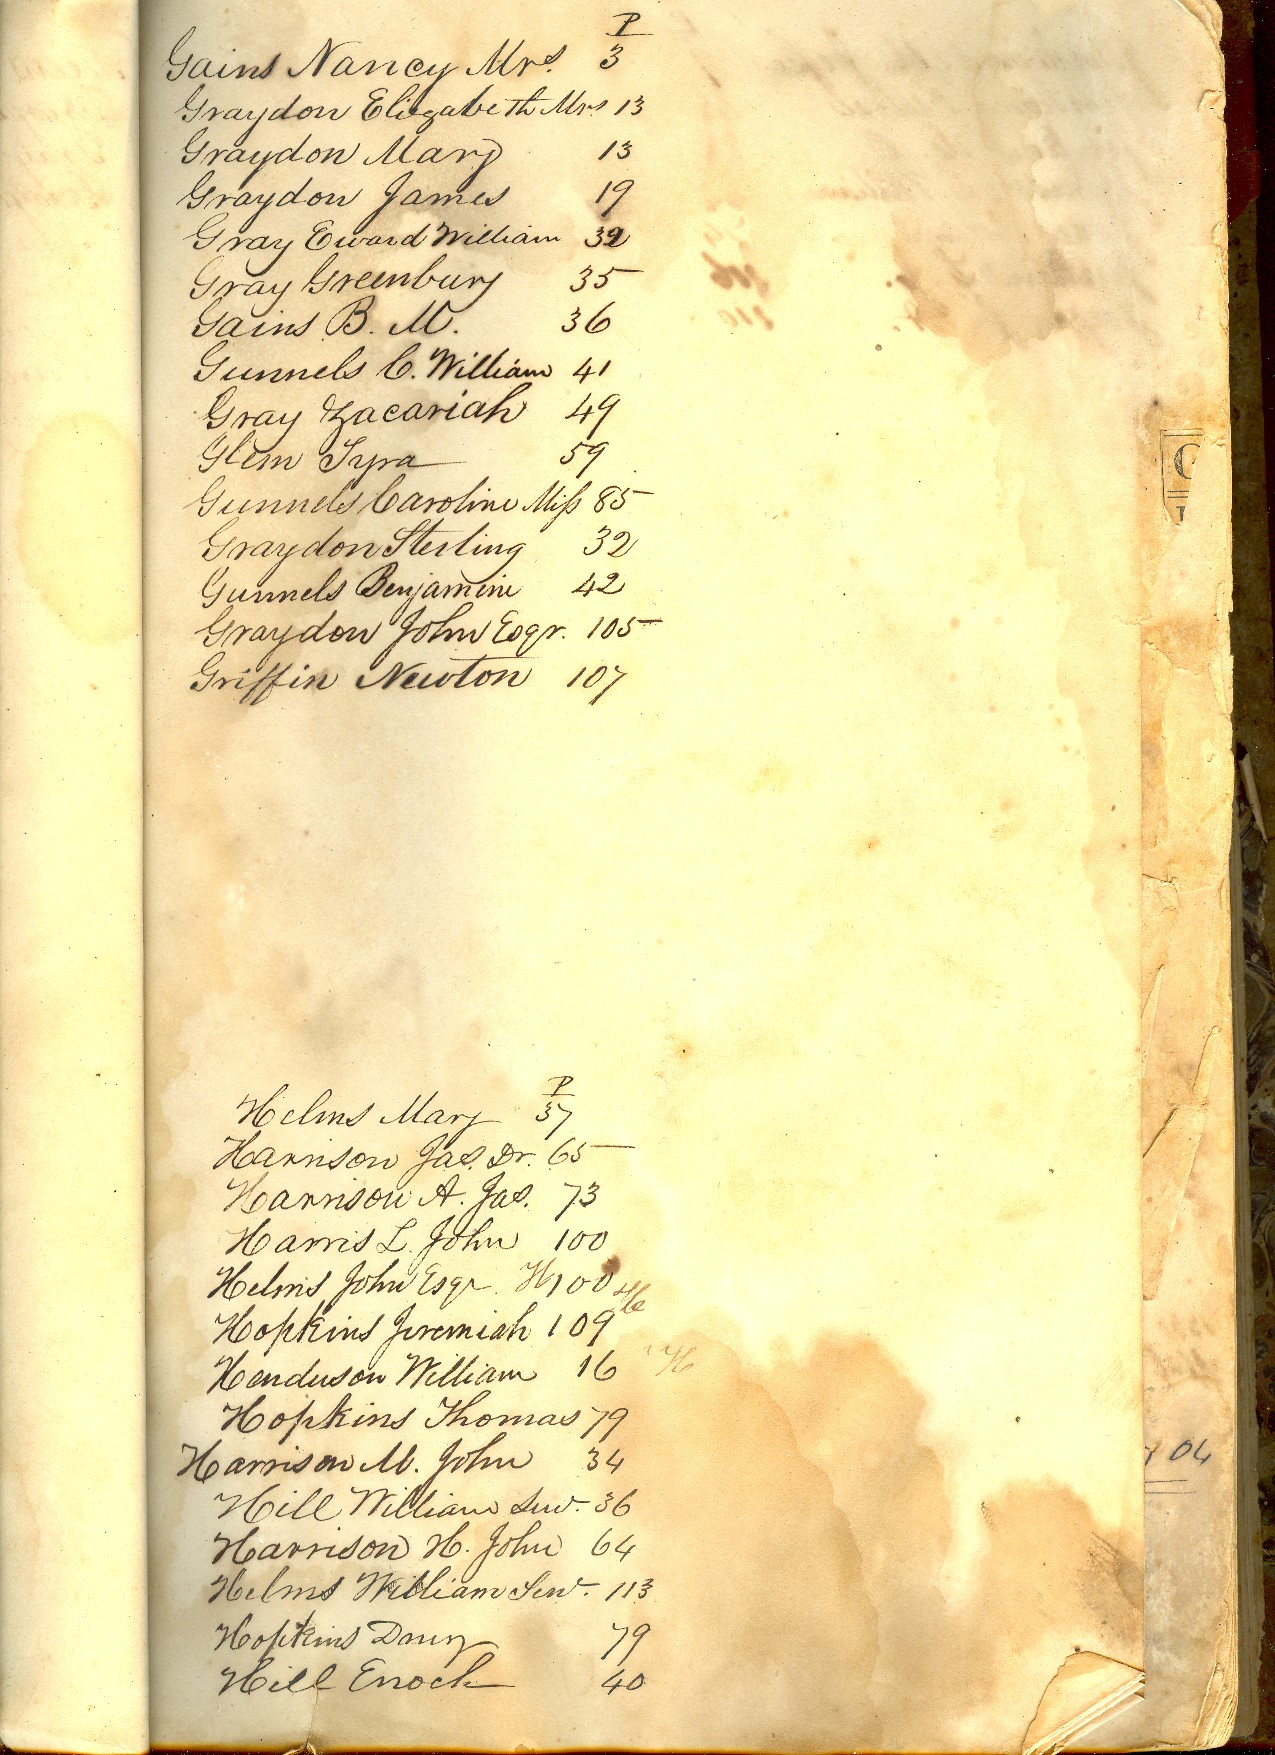 Bolling Store Ledger - 1844 Listing, p. 5